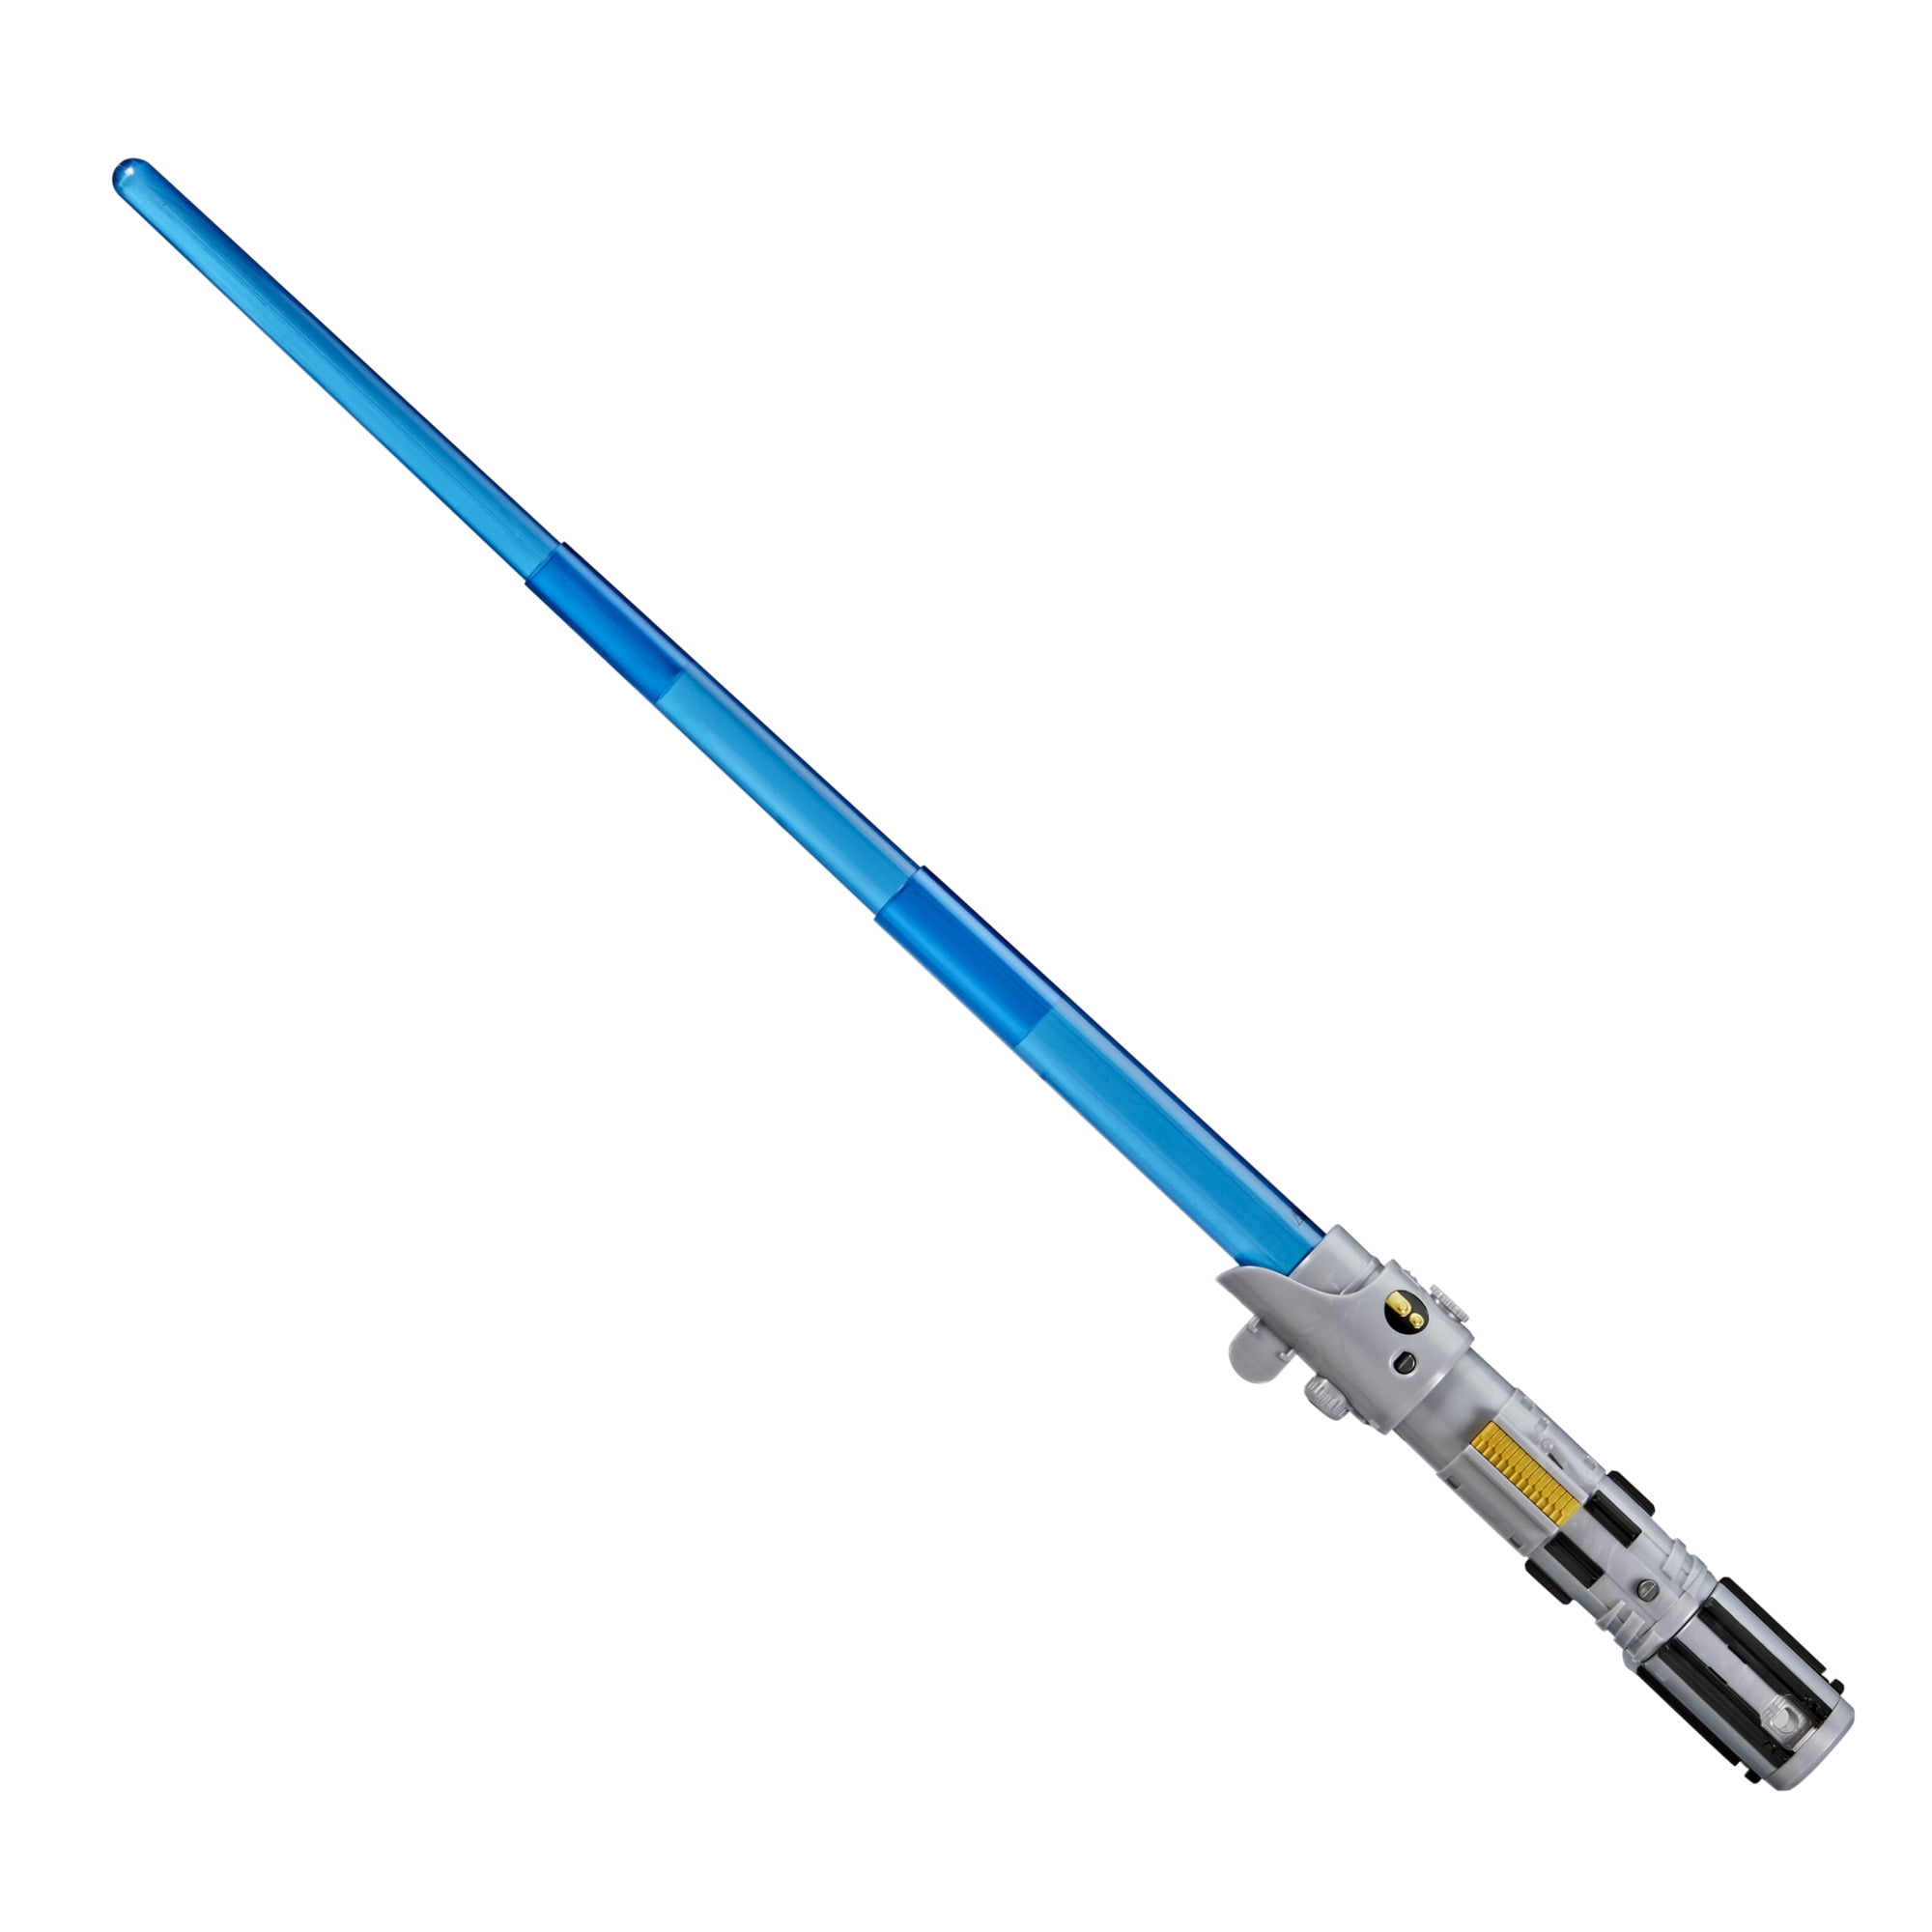 Star Wars vintage repro Weapon Green Lightsaber for Luke Skywalker 